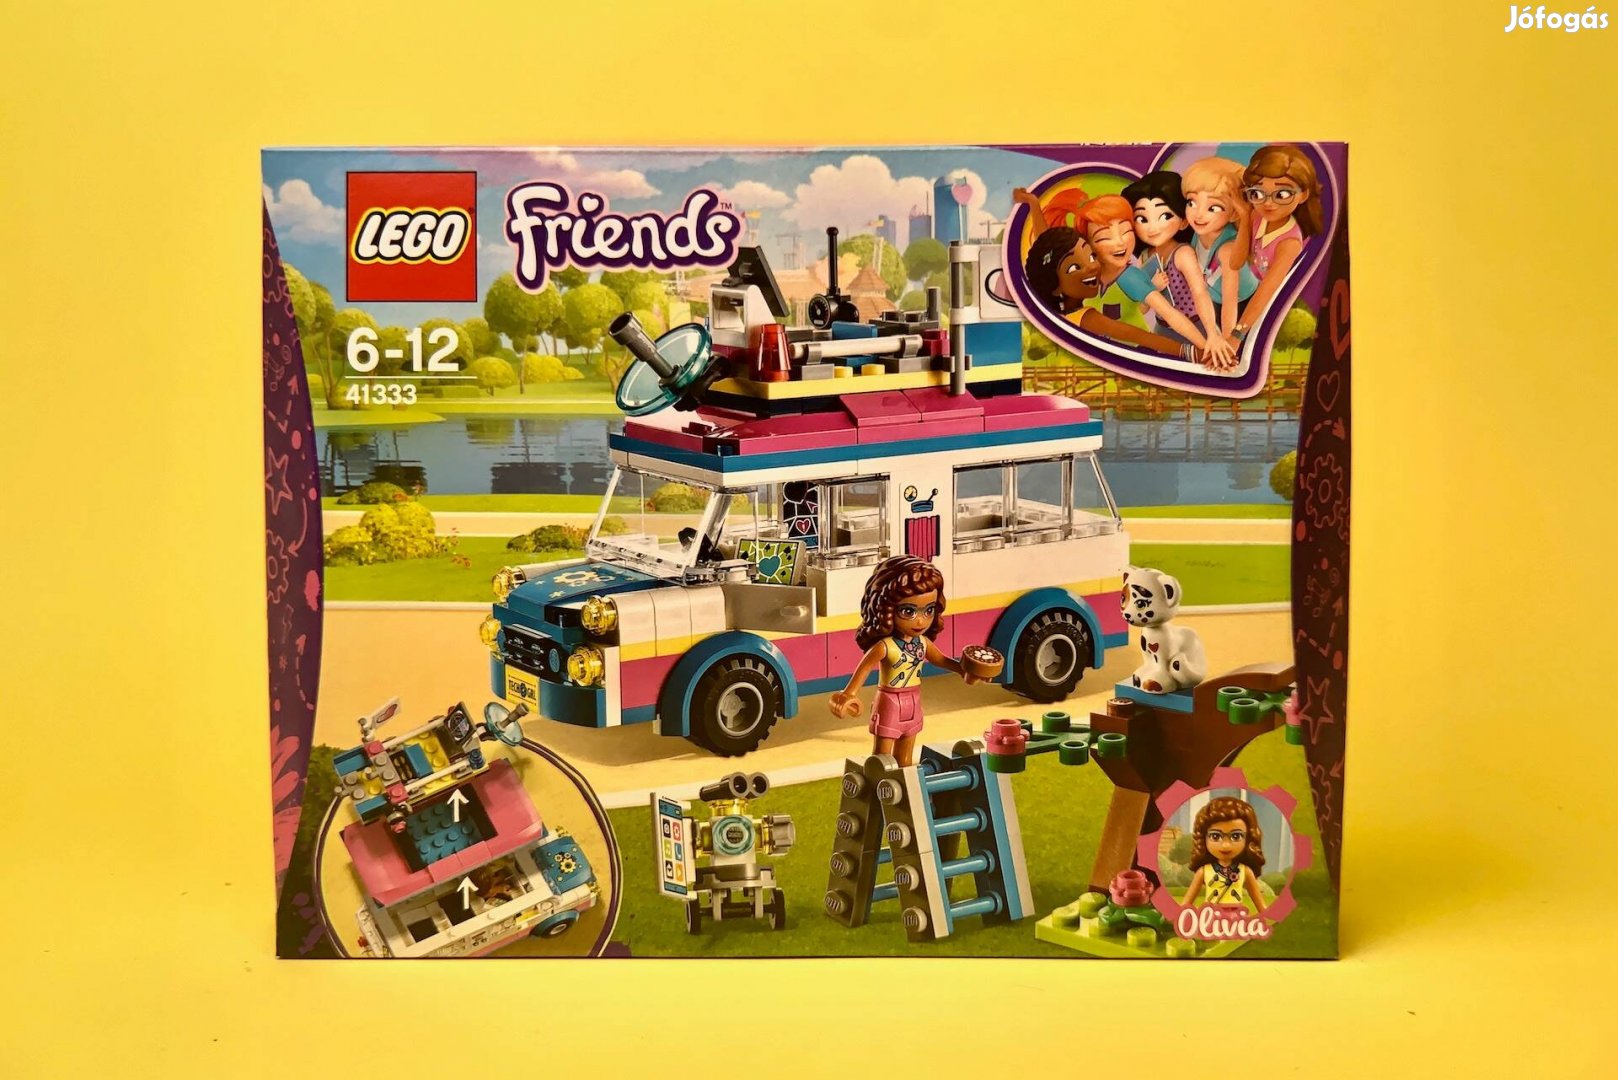 LEGO Friends 41333 Olivia's Mission Vehicle, Uj, Bontatlan